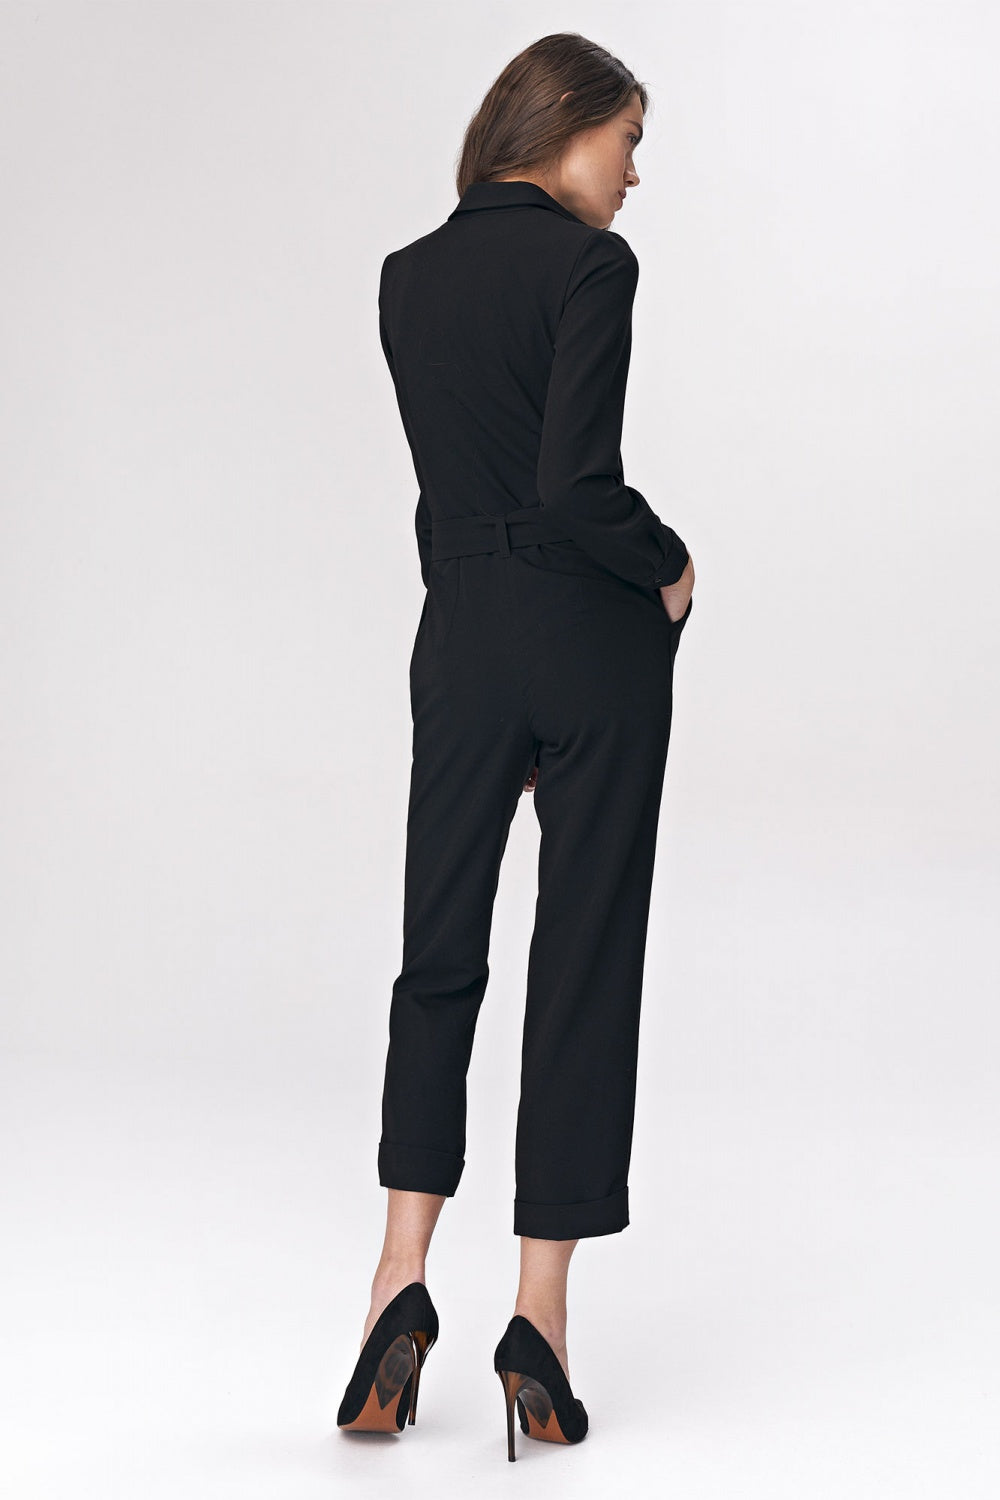 Black Long-Sleeved Pant Suit